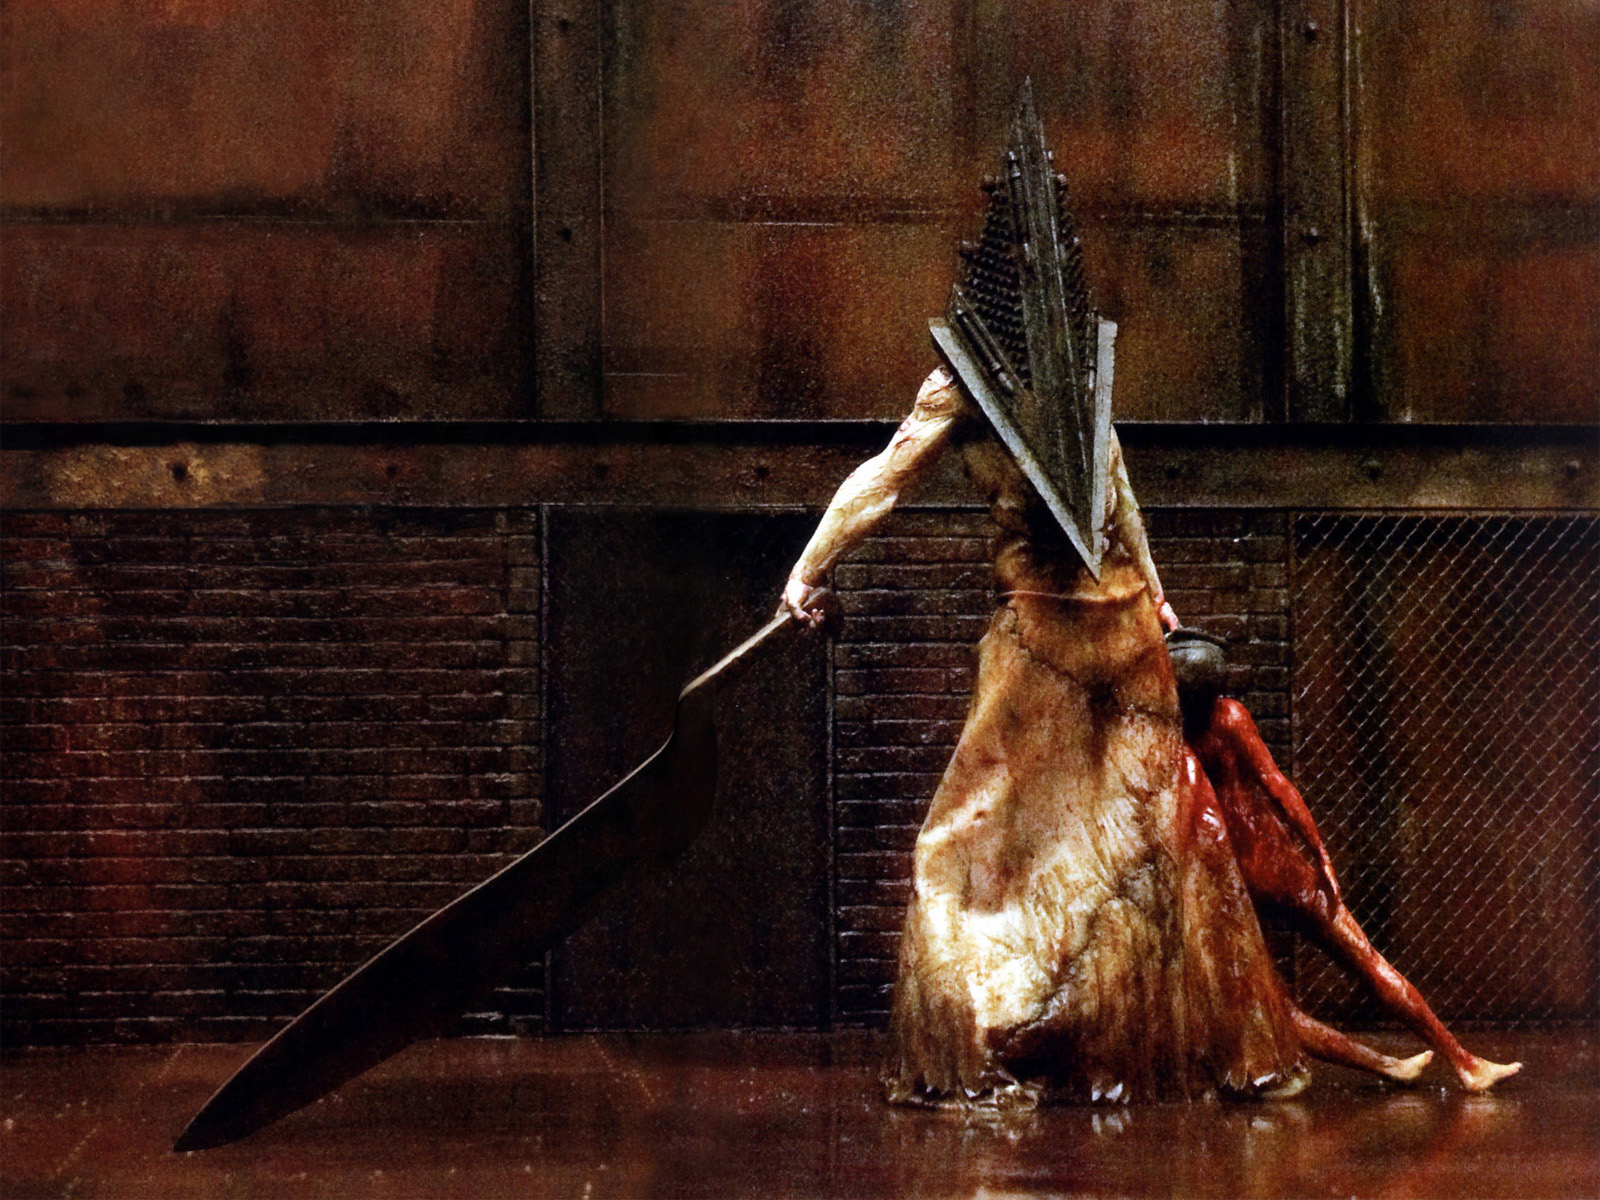 Pyramid Head in Silent Hill (2006)